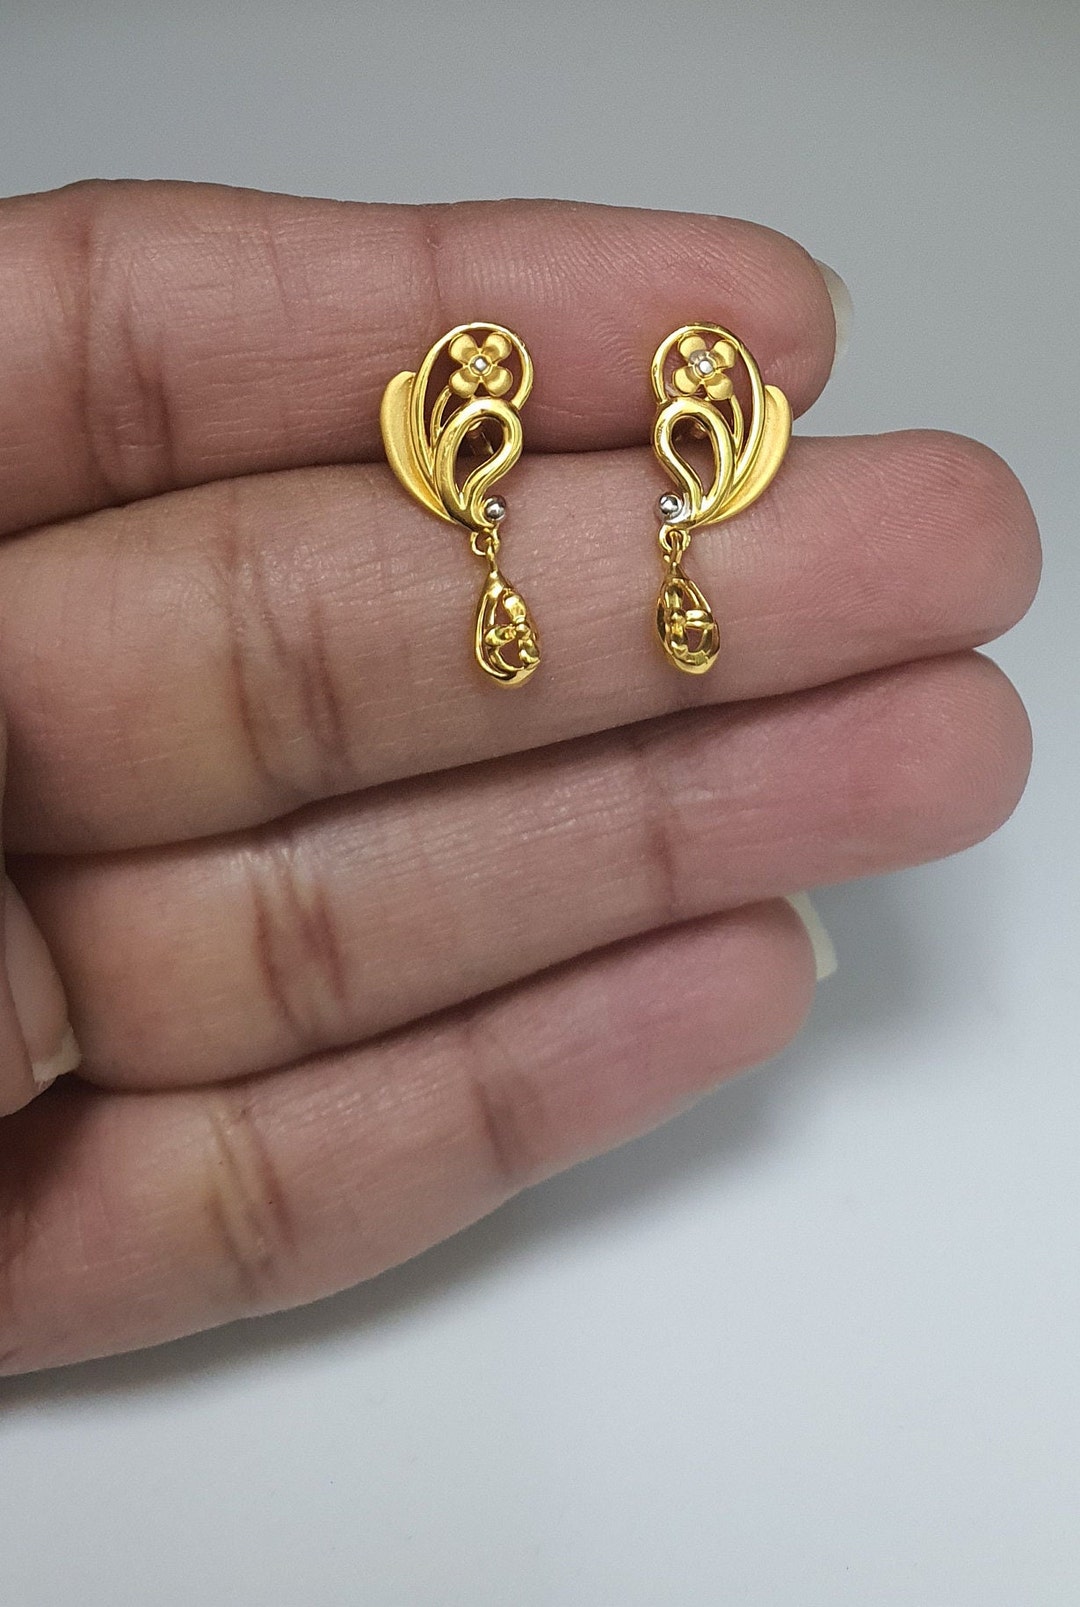 7 Gold Earrings Designs For Daily Use - ZeroKaata Studio